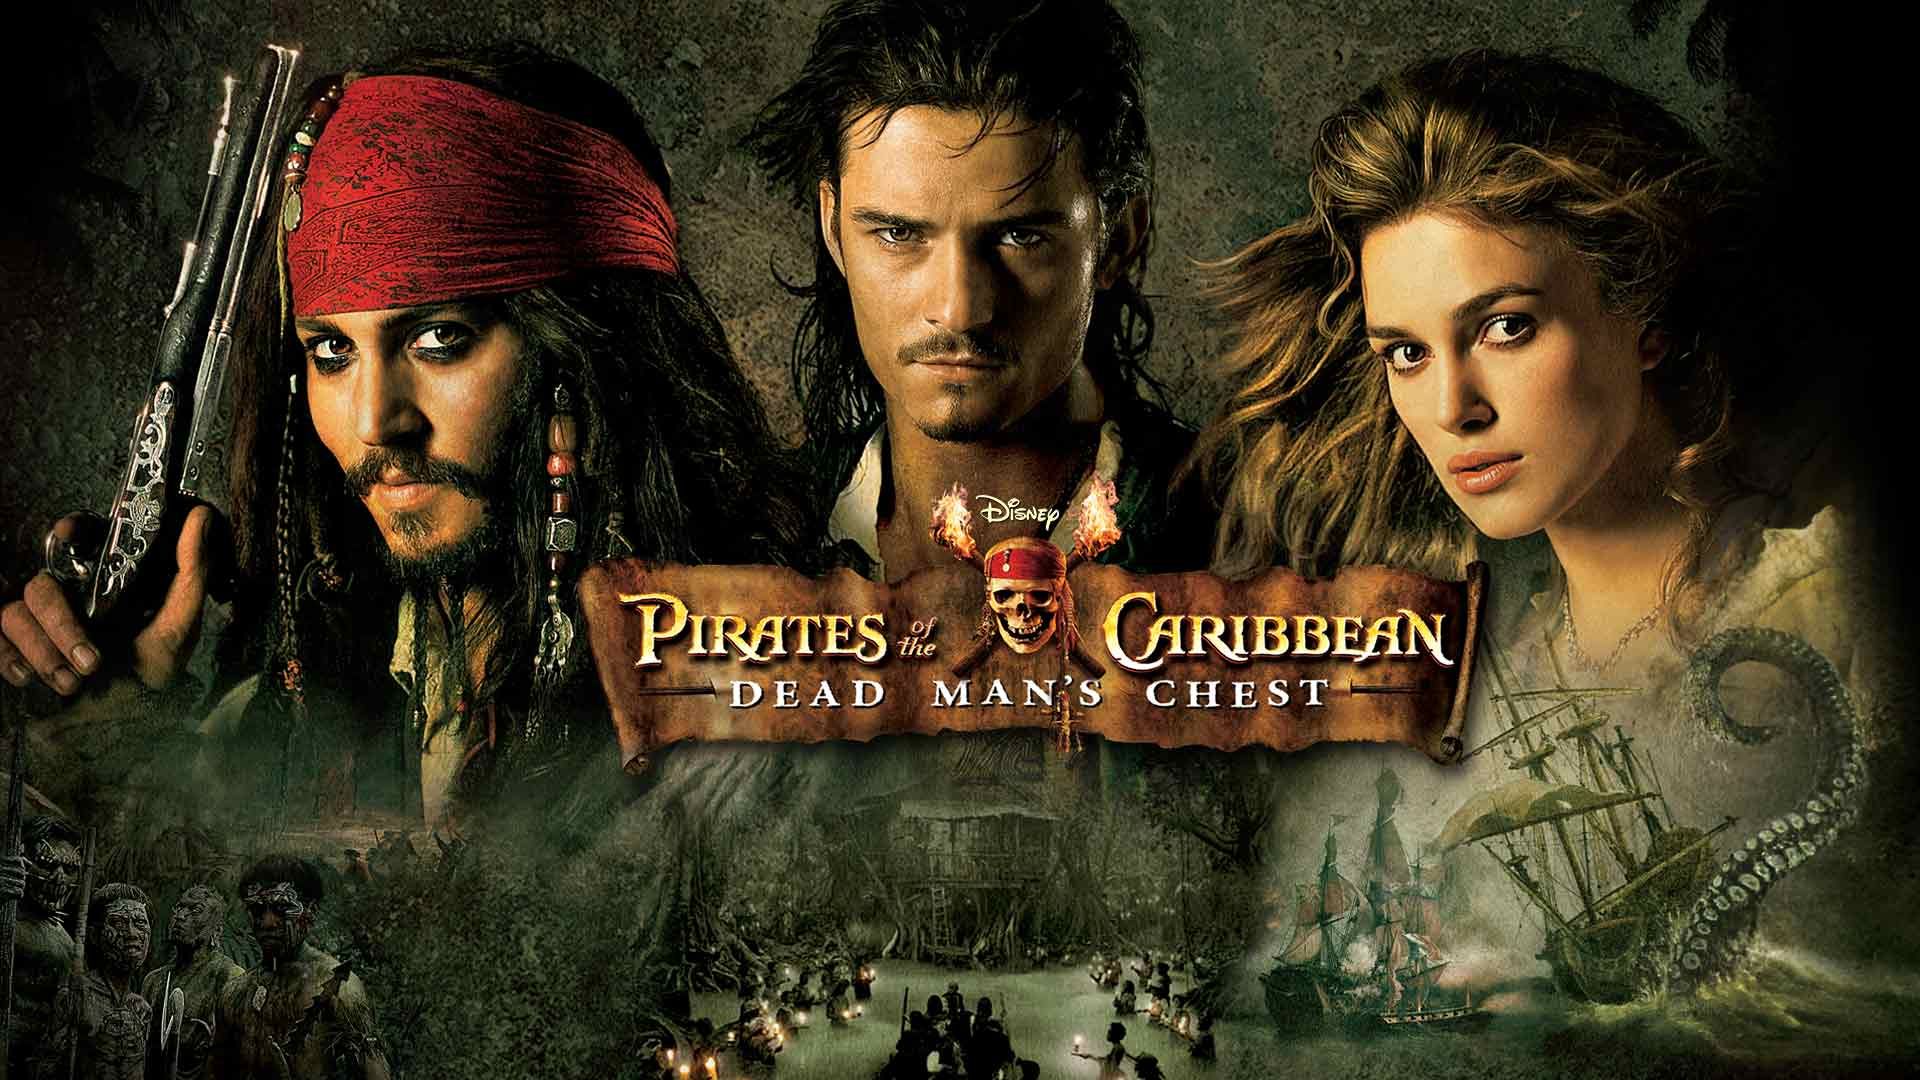 Www.pirates Of The Caribbean Hollywood Movie Downoad Hindi.com